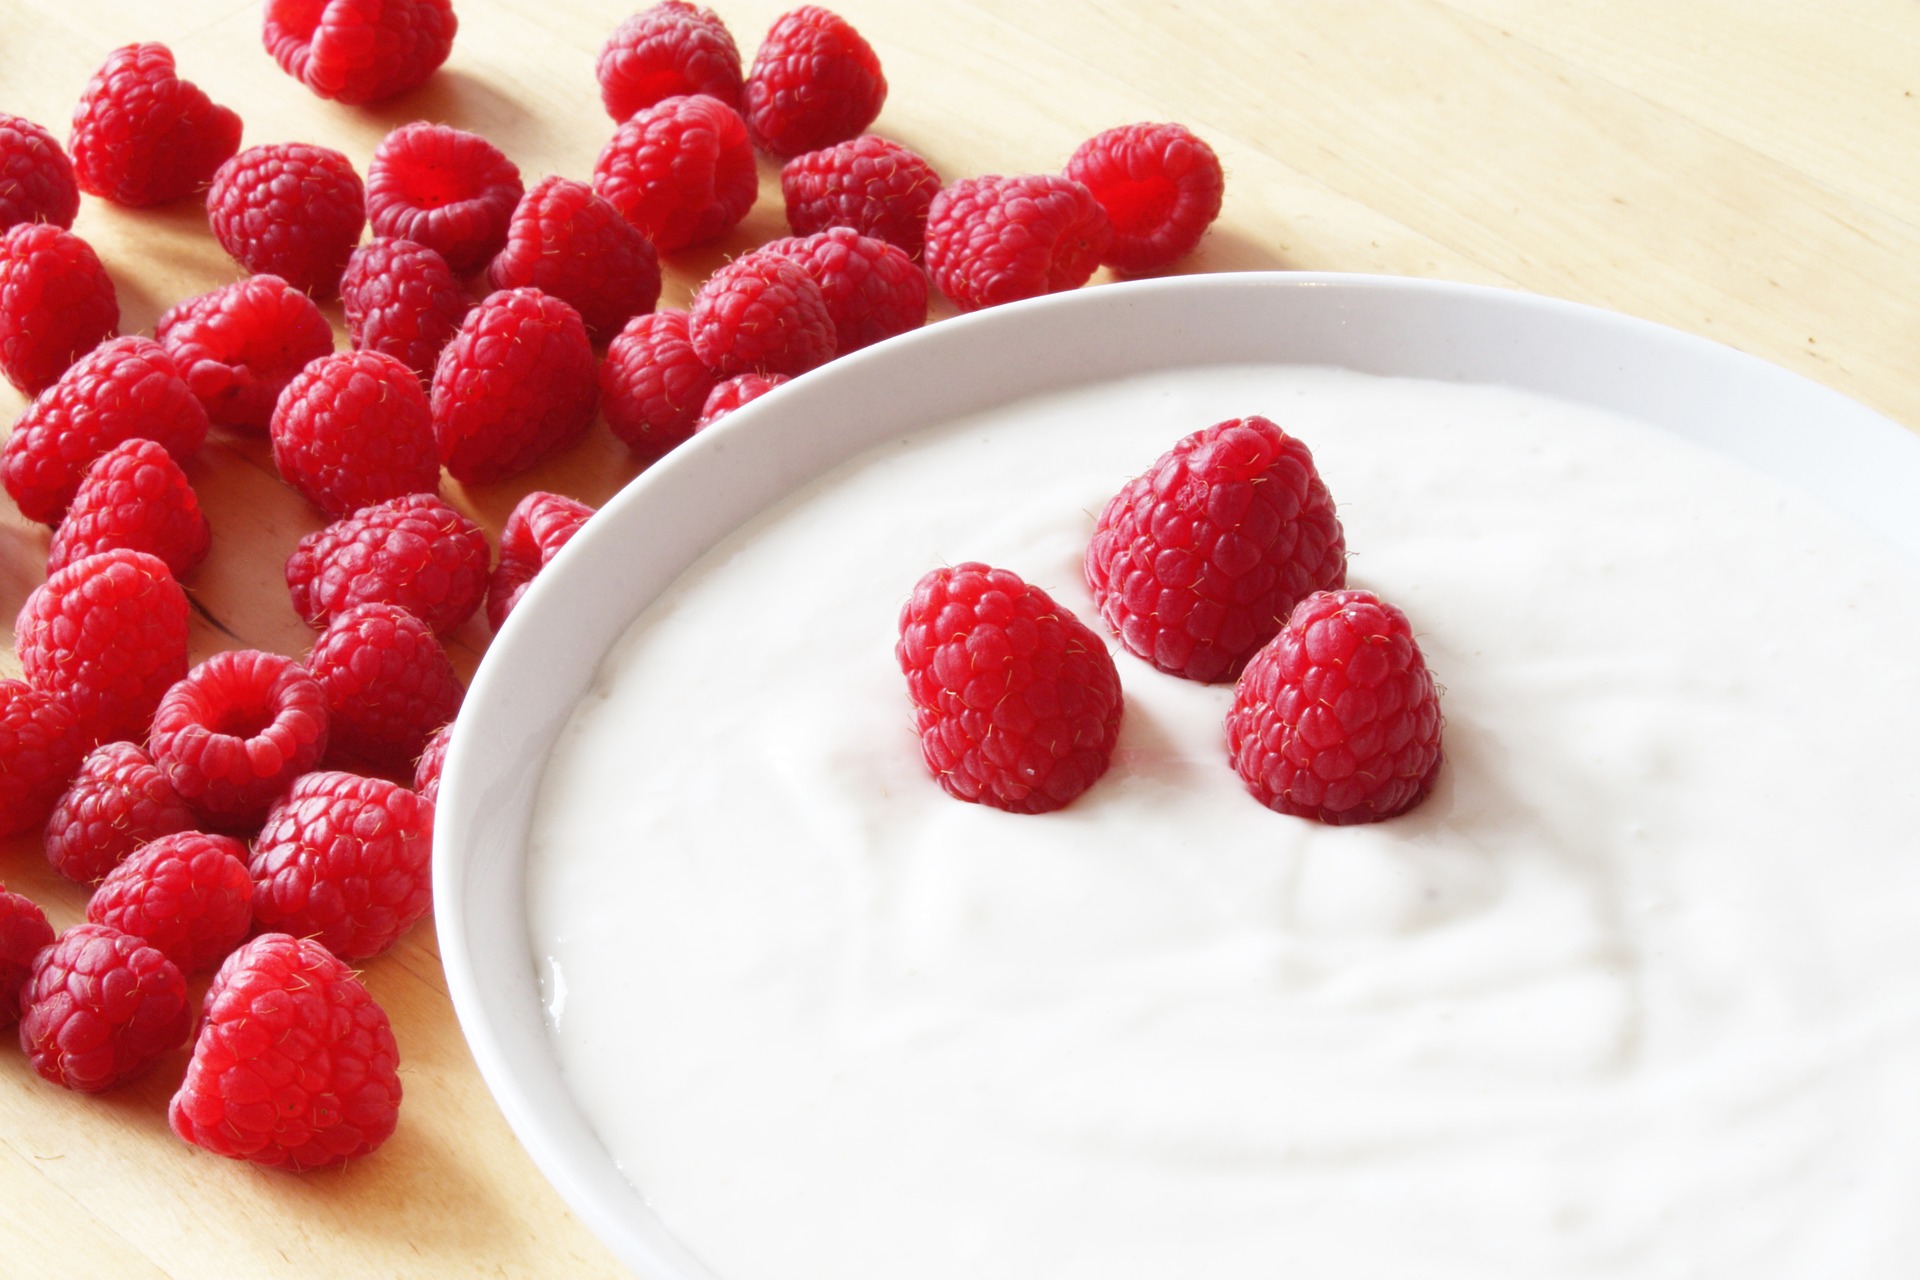 Yoghurt can prevent precancerous growth in men